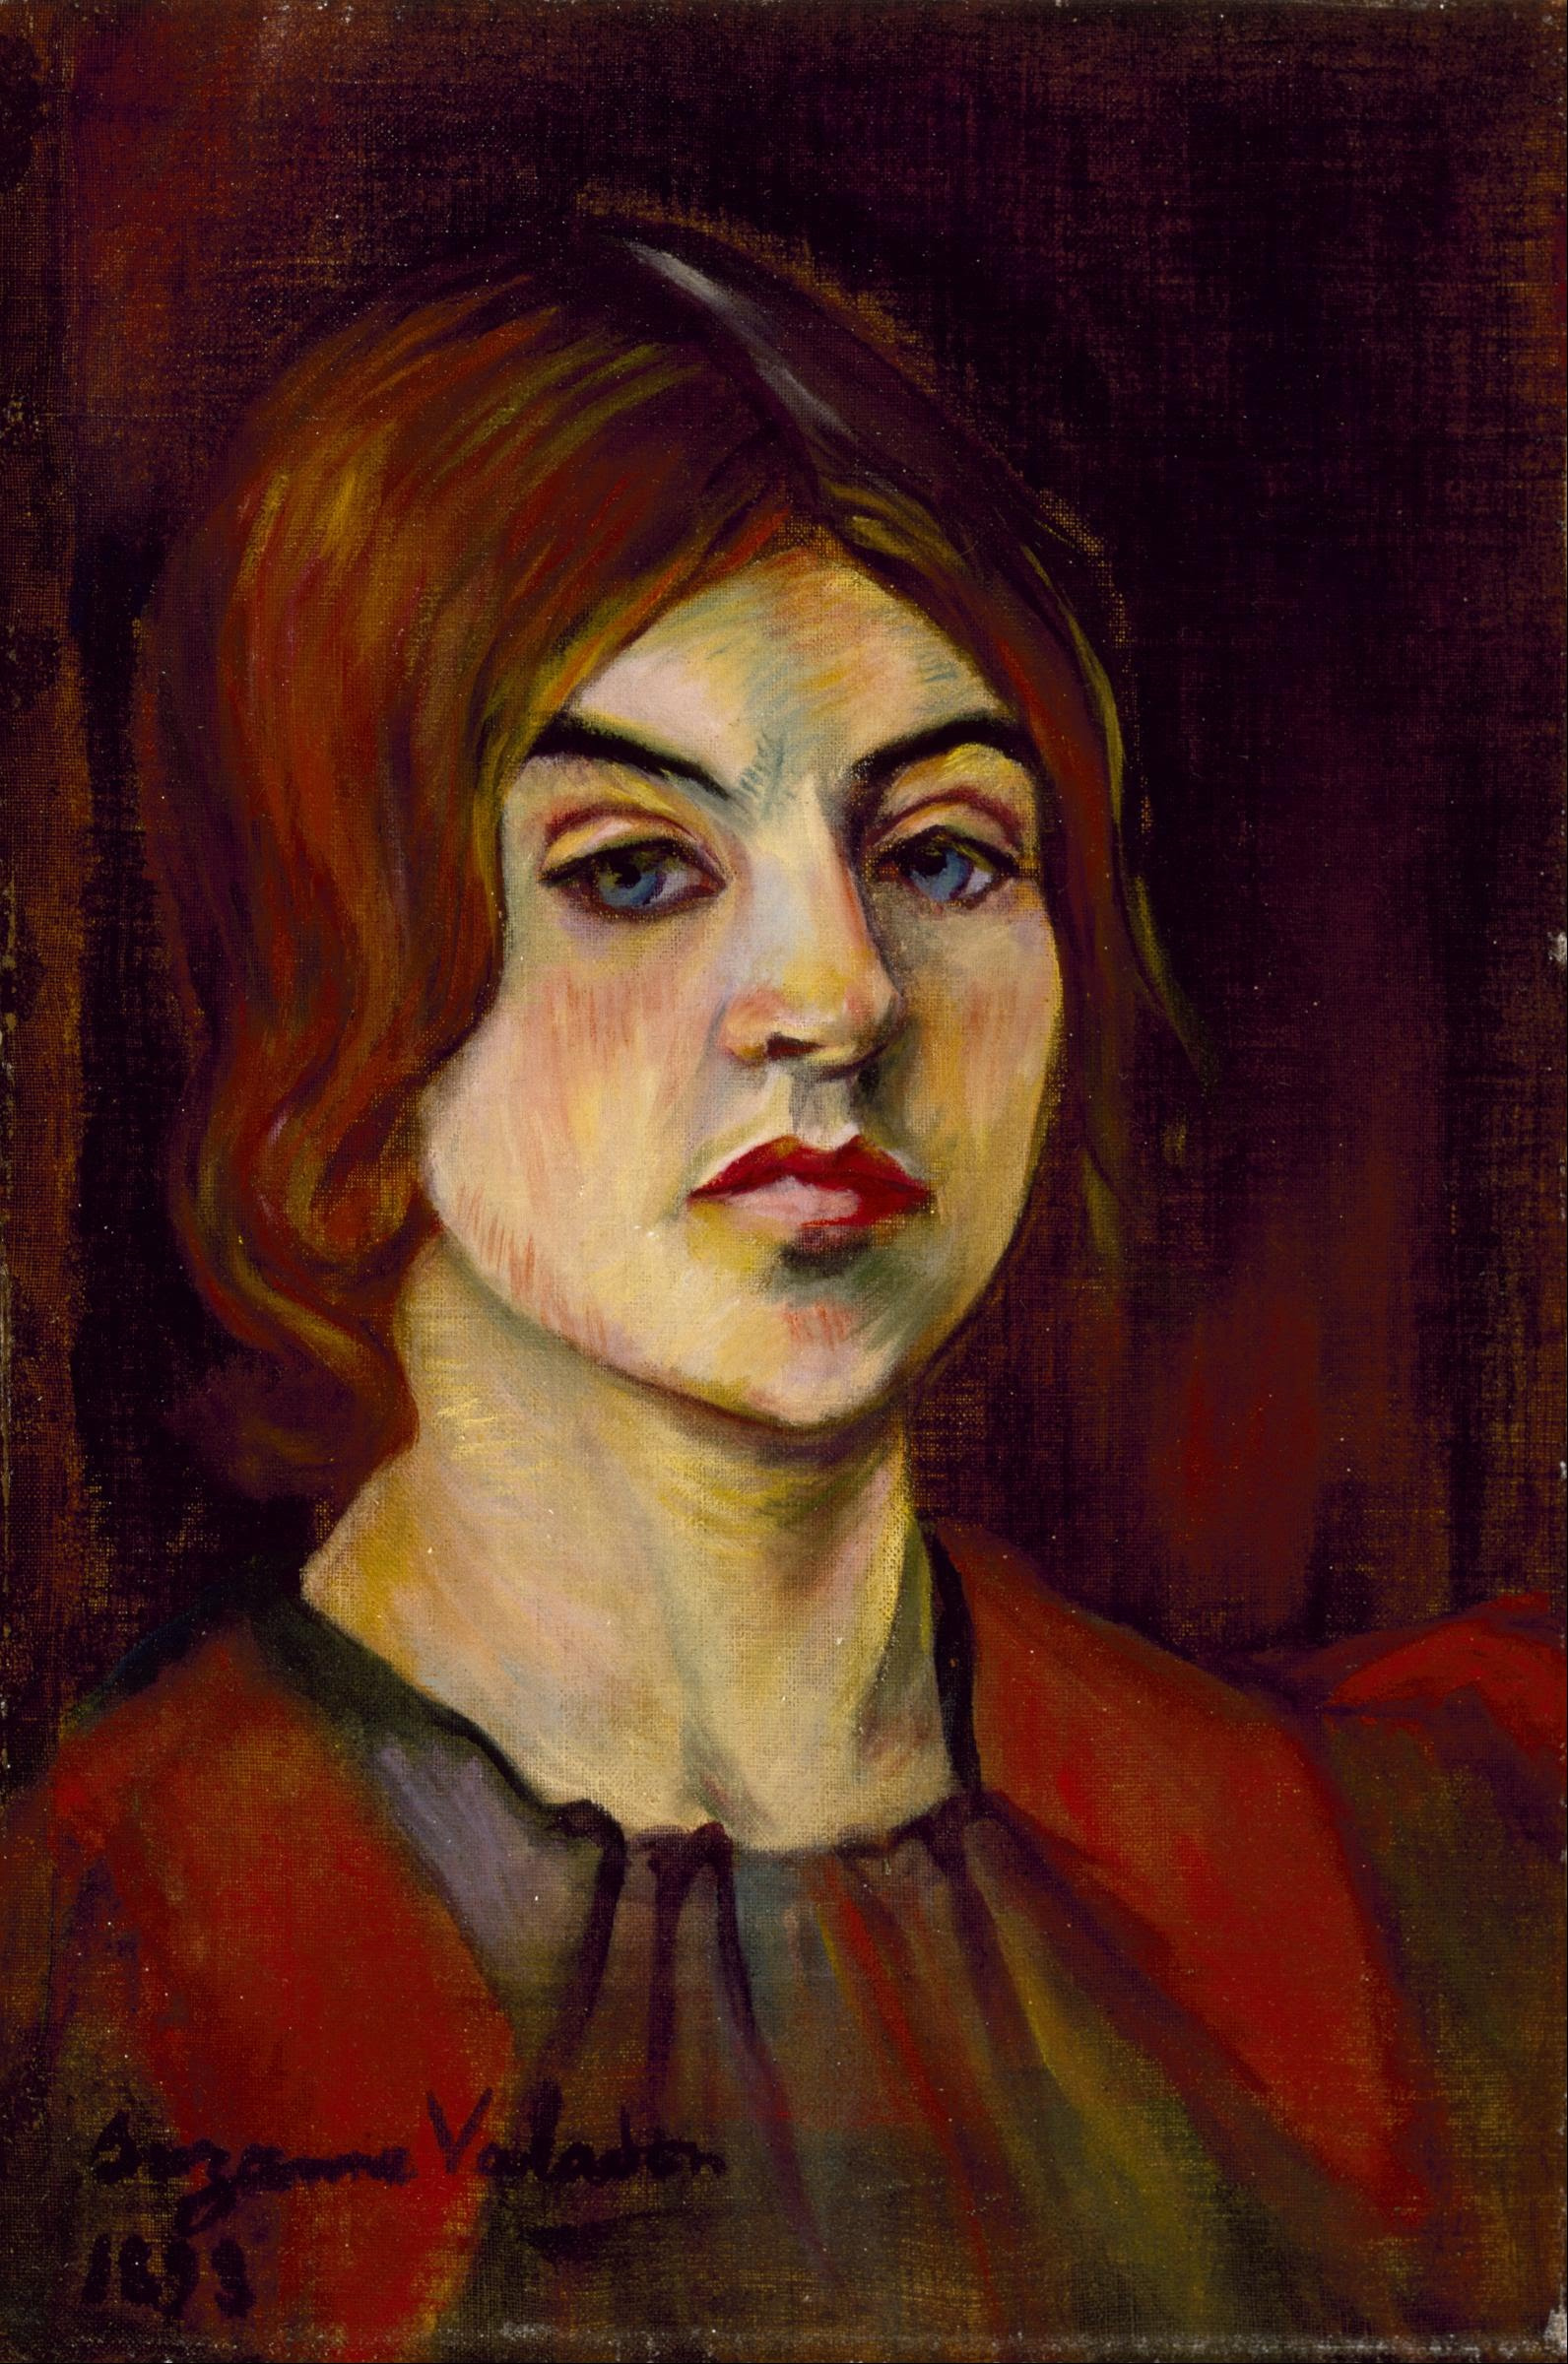 Suzanne Valadon - 23 septembre 1865 - 7 avril 1938